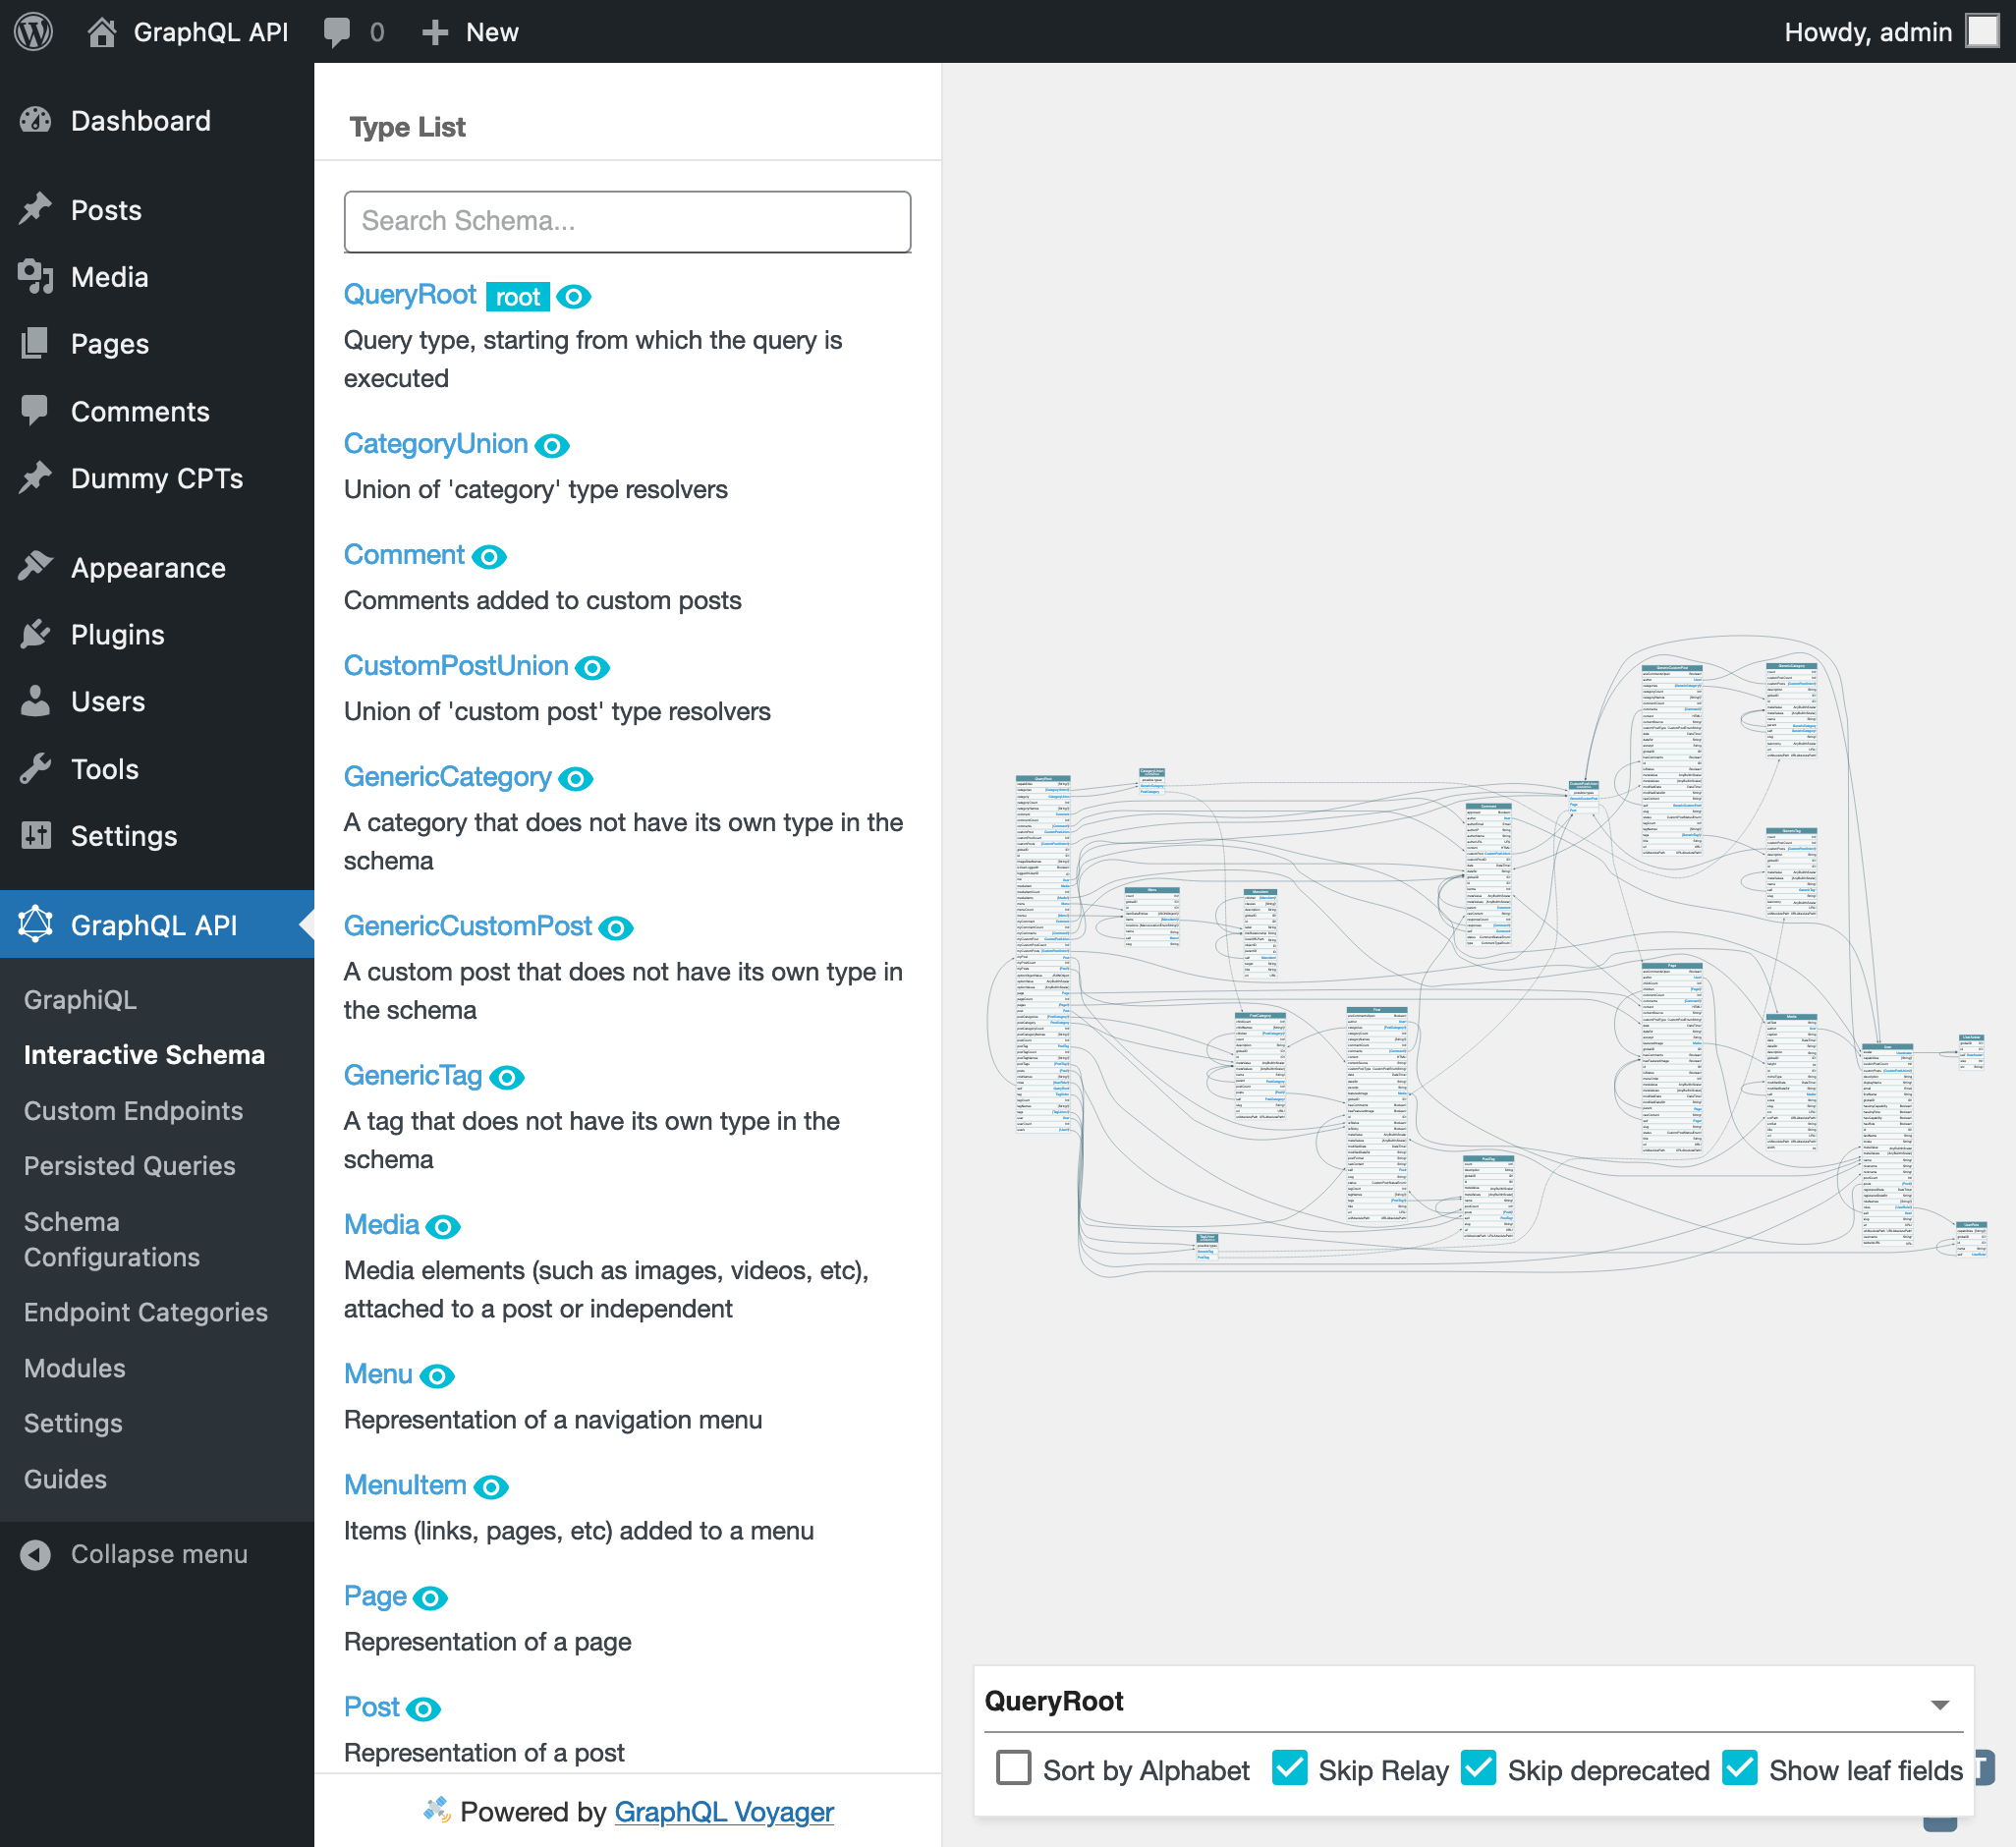 The interactive schema visualizer